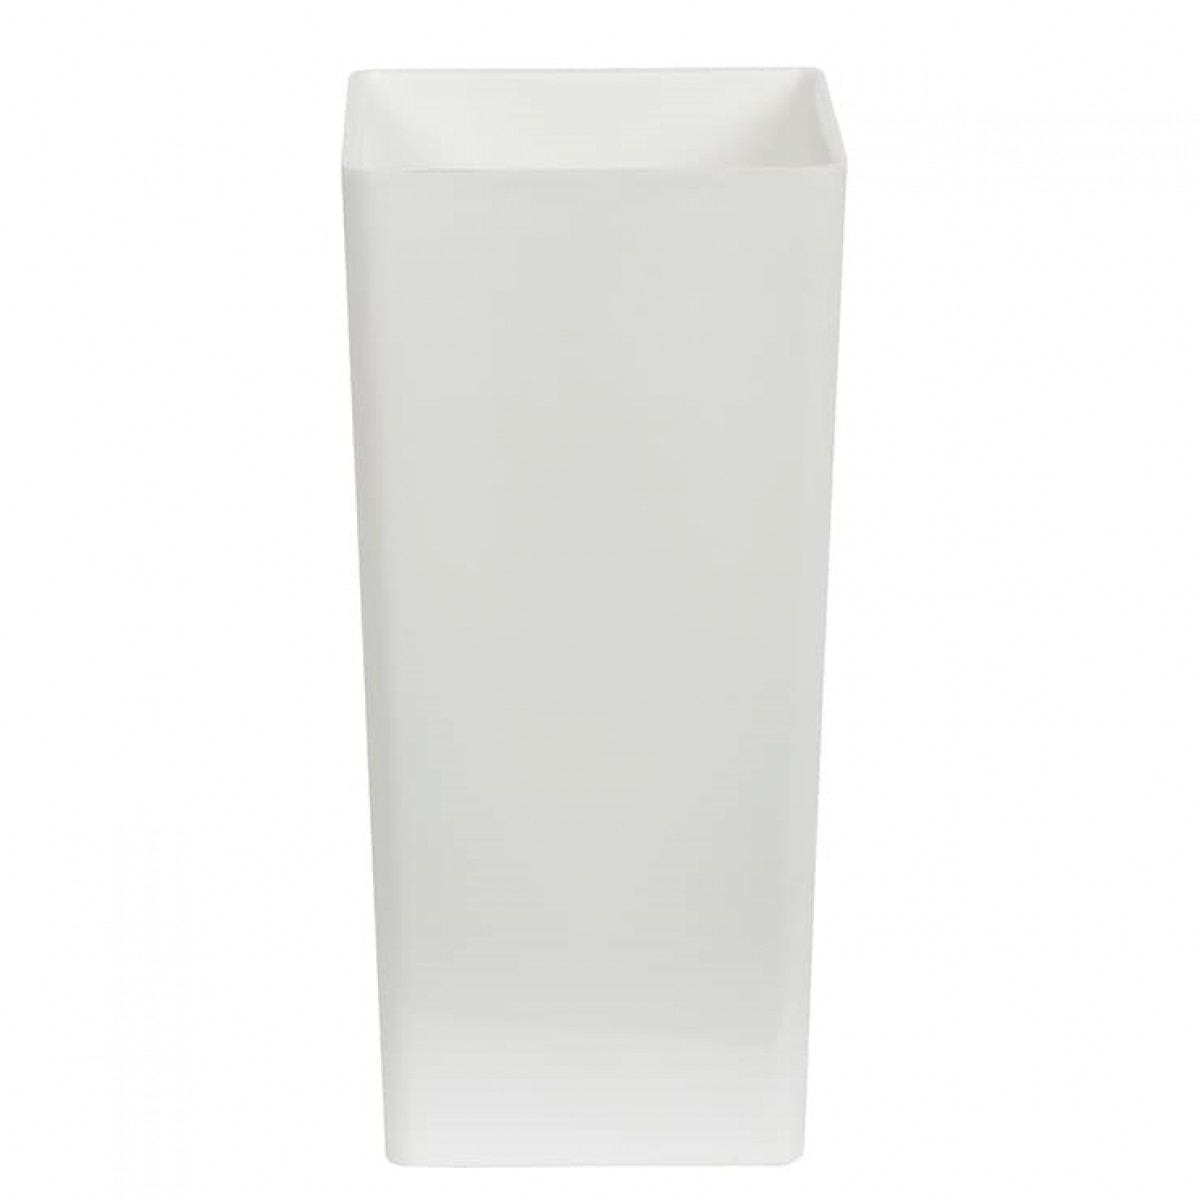 5115 Cube White 12x12x25cm Acrylic Vase - 1 No